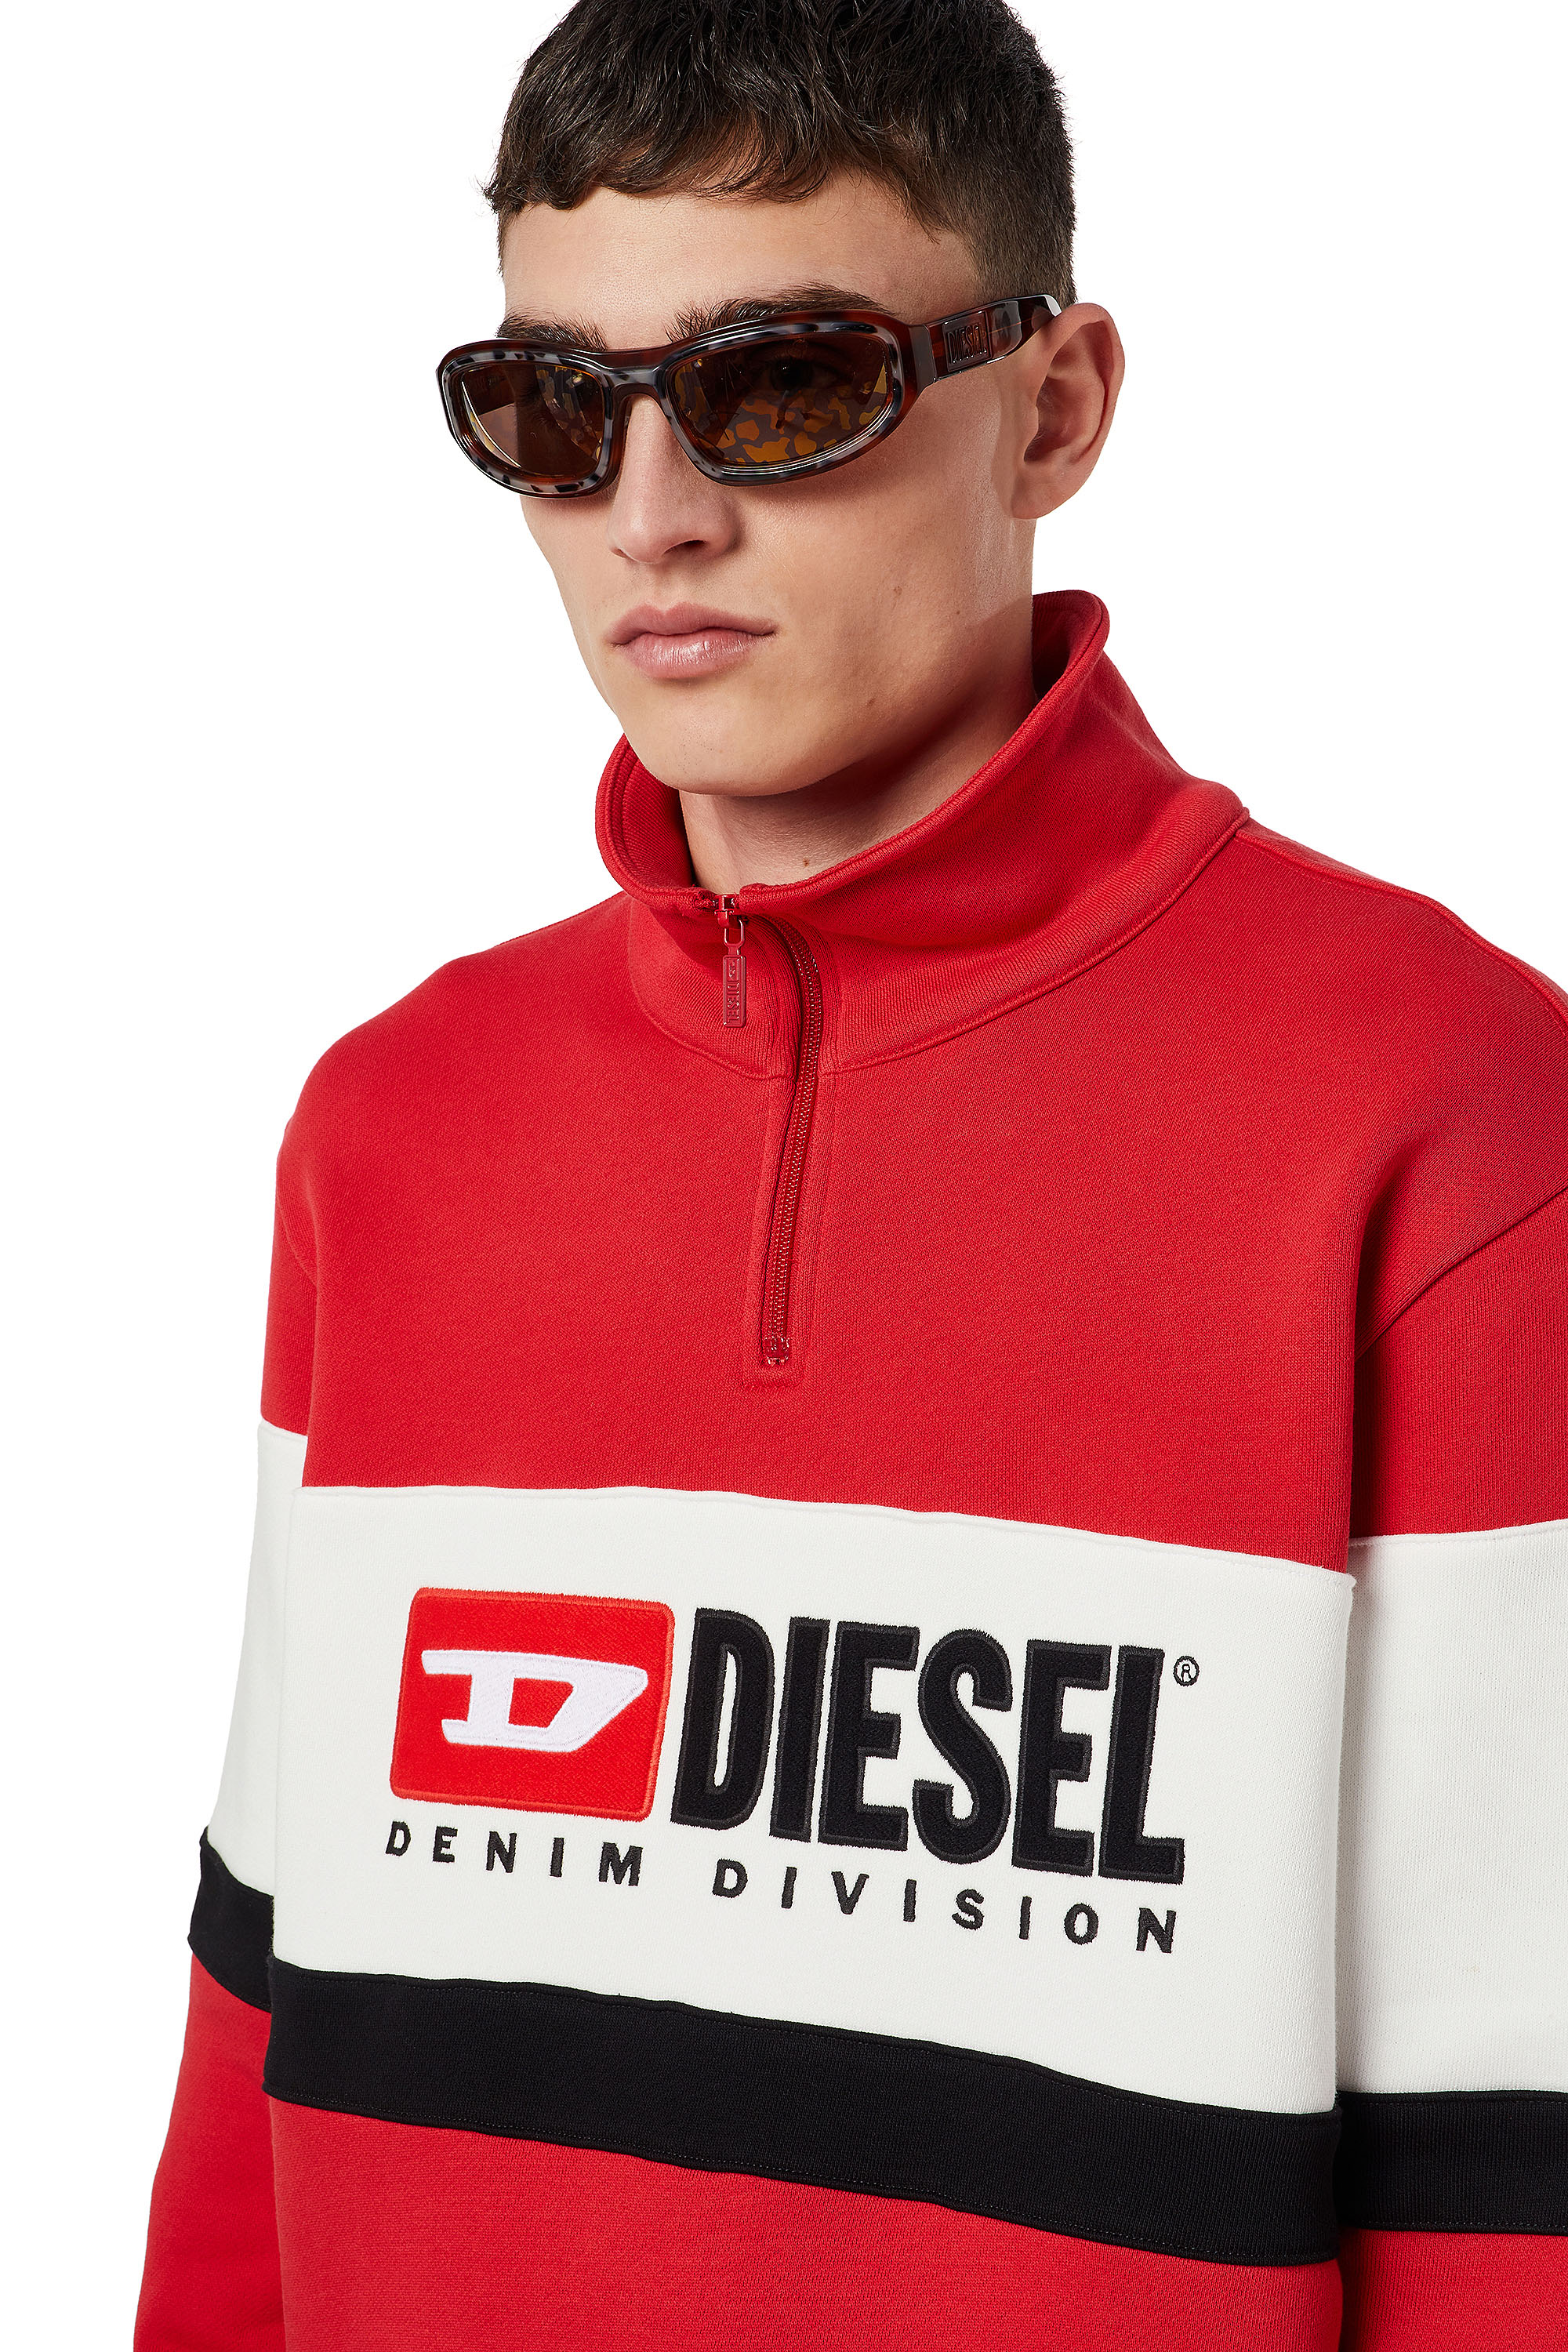 Diesel - S-SAINT-DIVISION, Red - Image 5